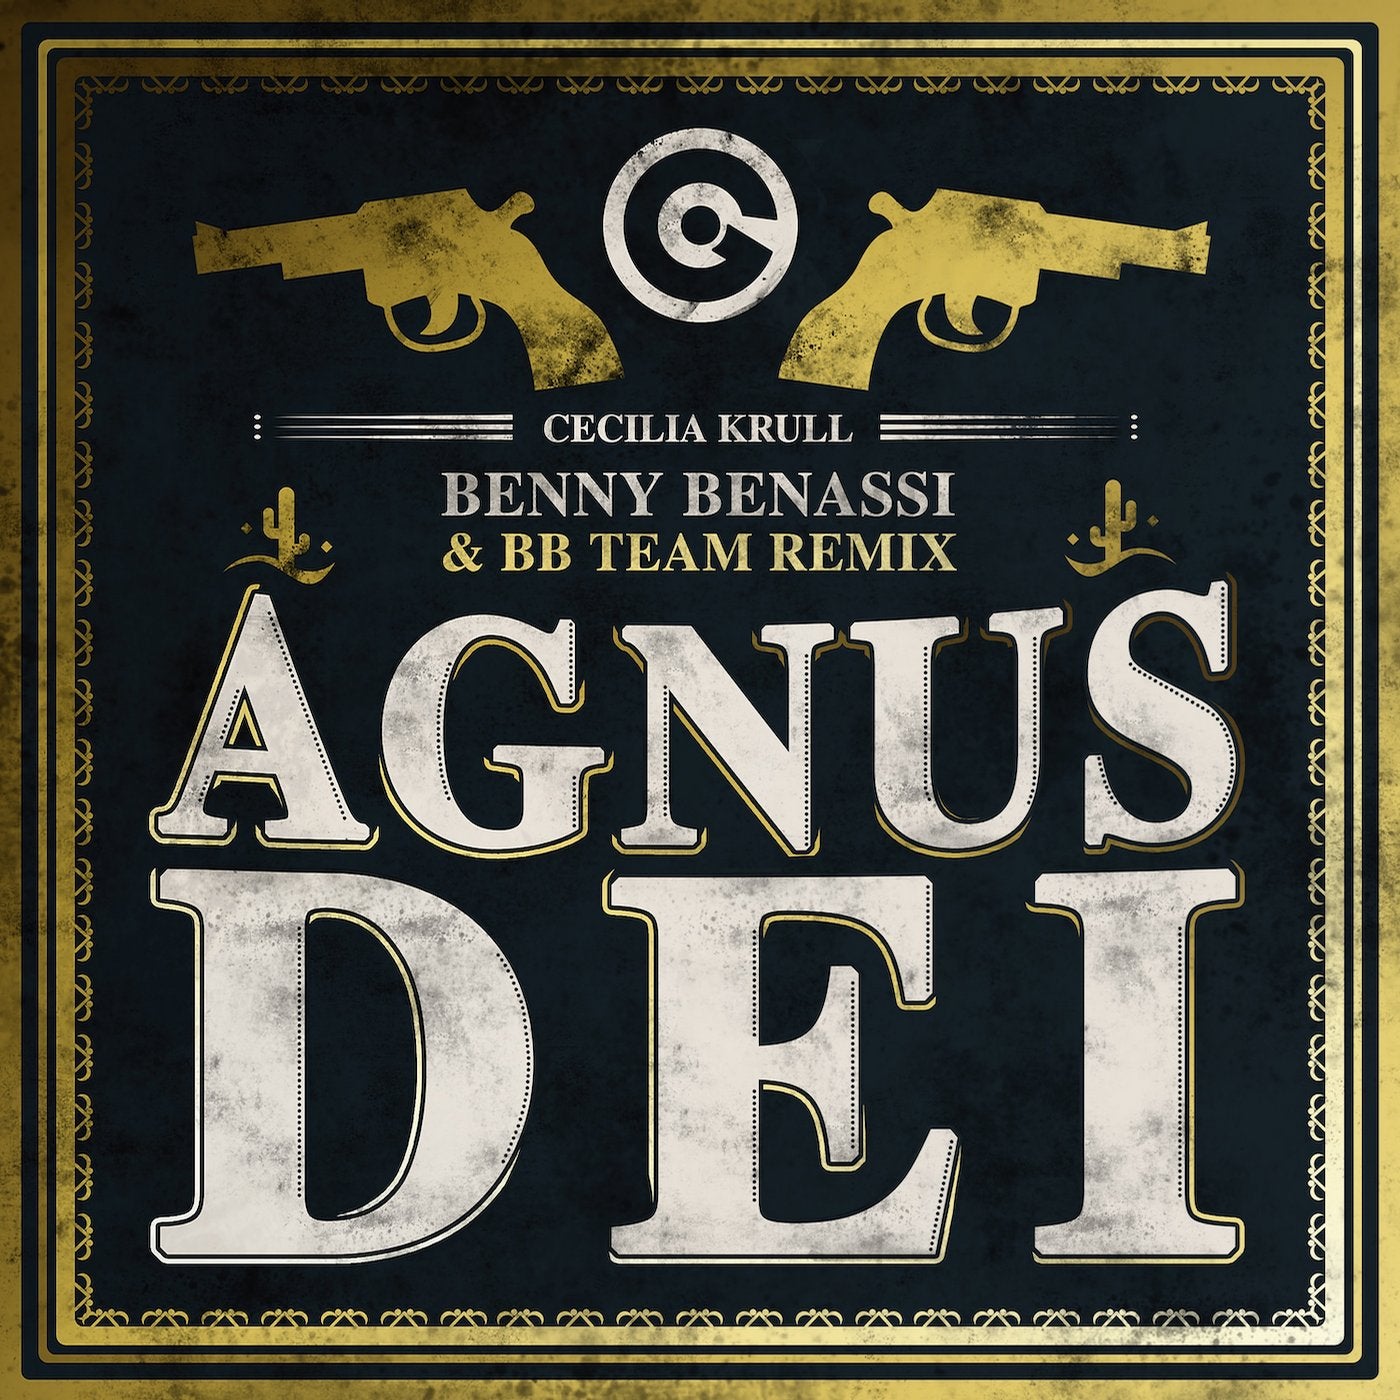 Recount Syndicate Homeless Benny Benassi music download - Beatport